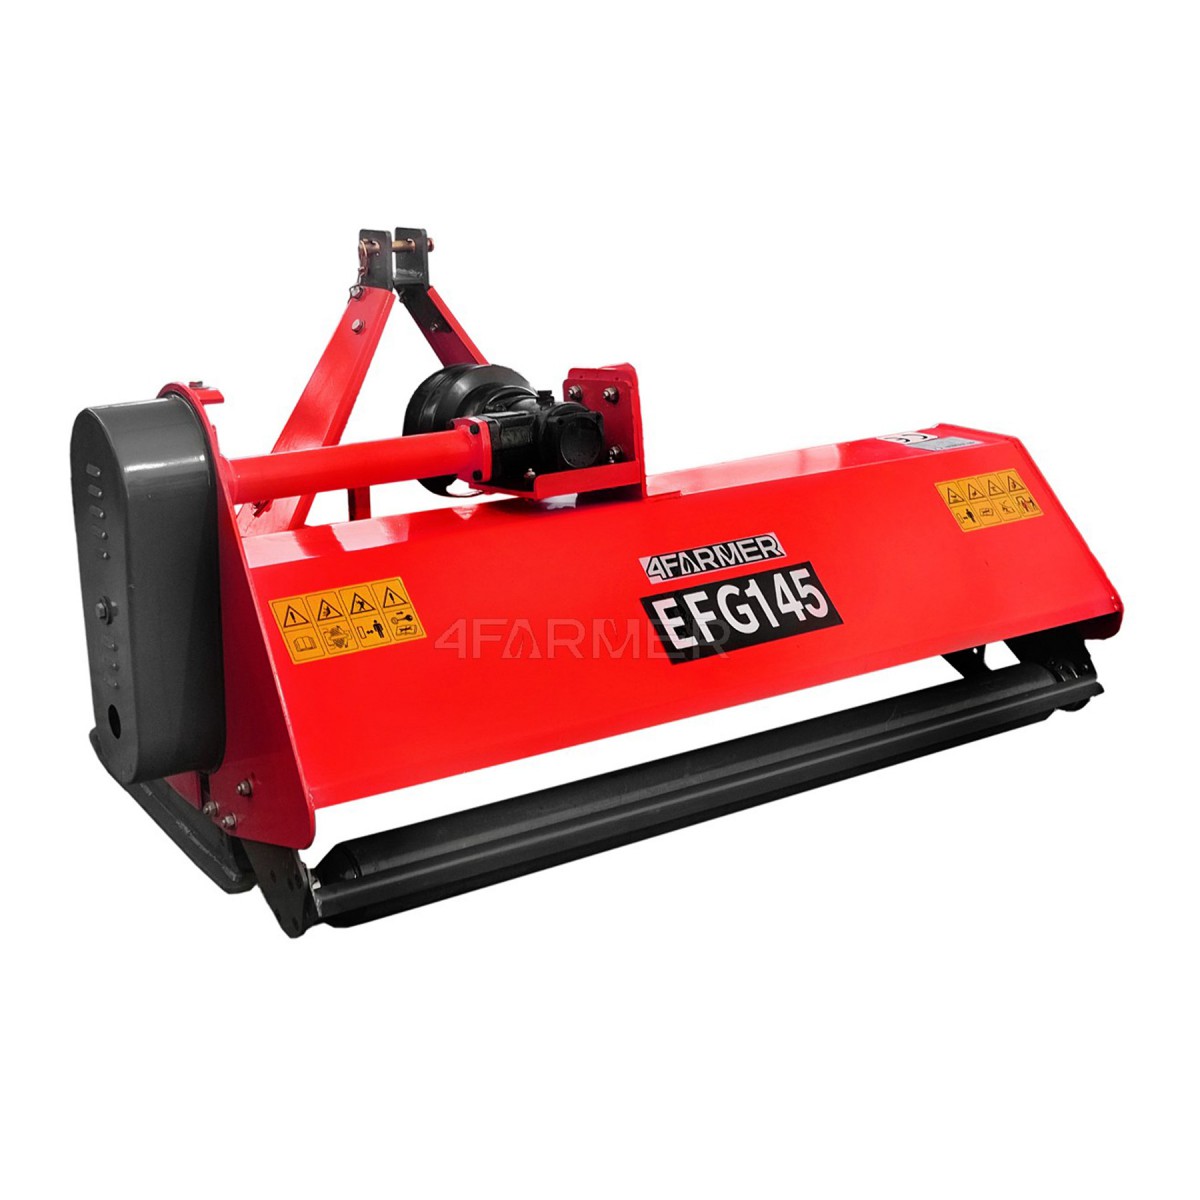 EFG 145 4FARMER flail mower - red